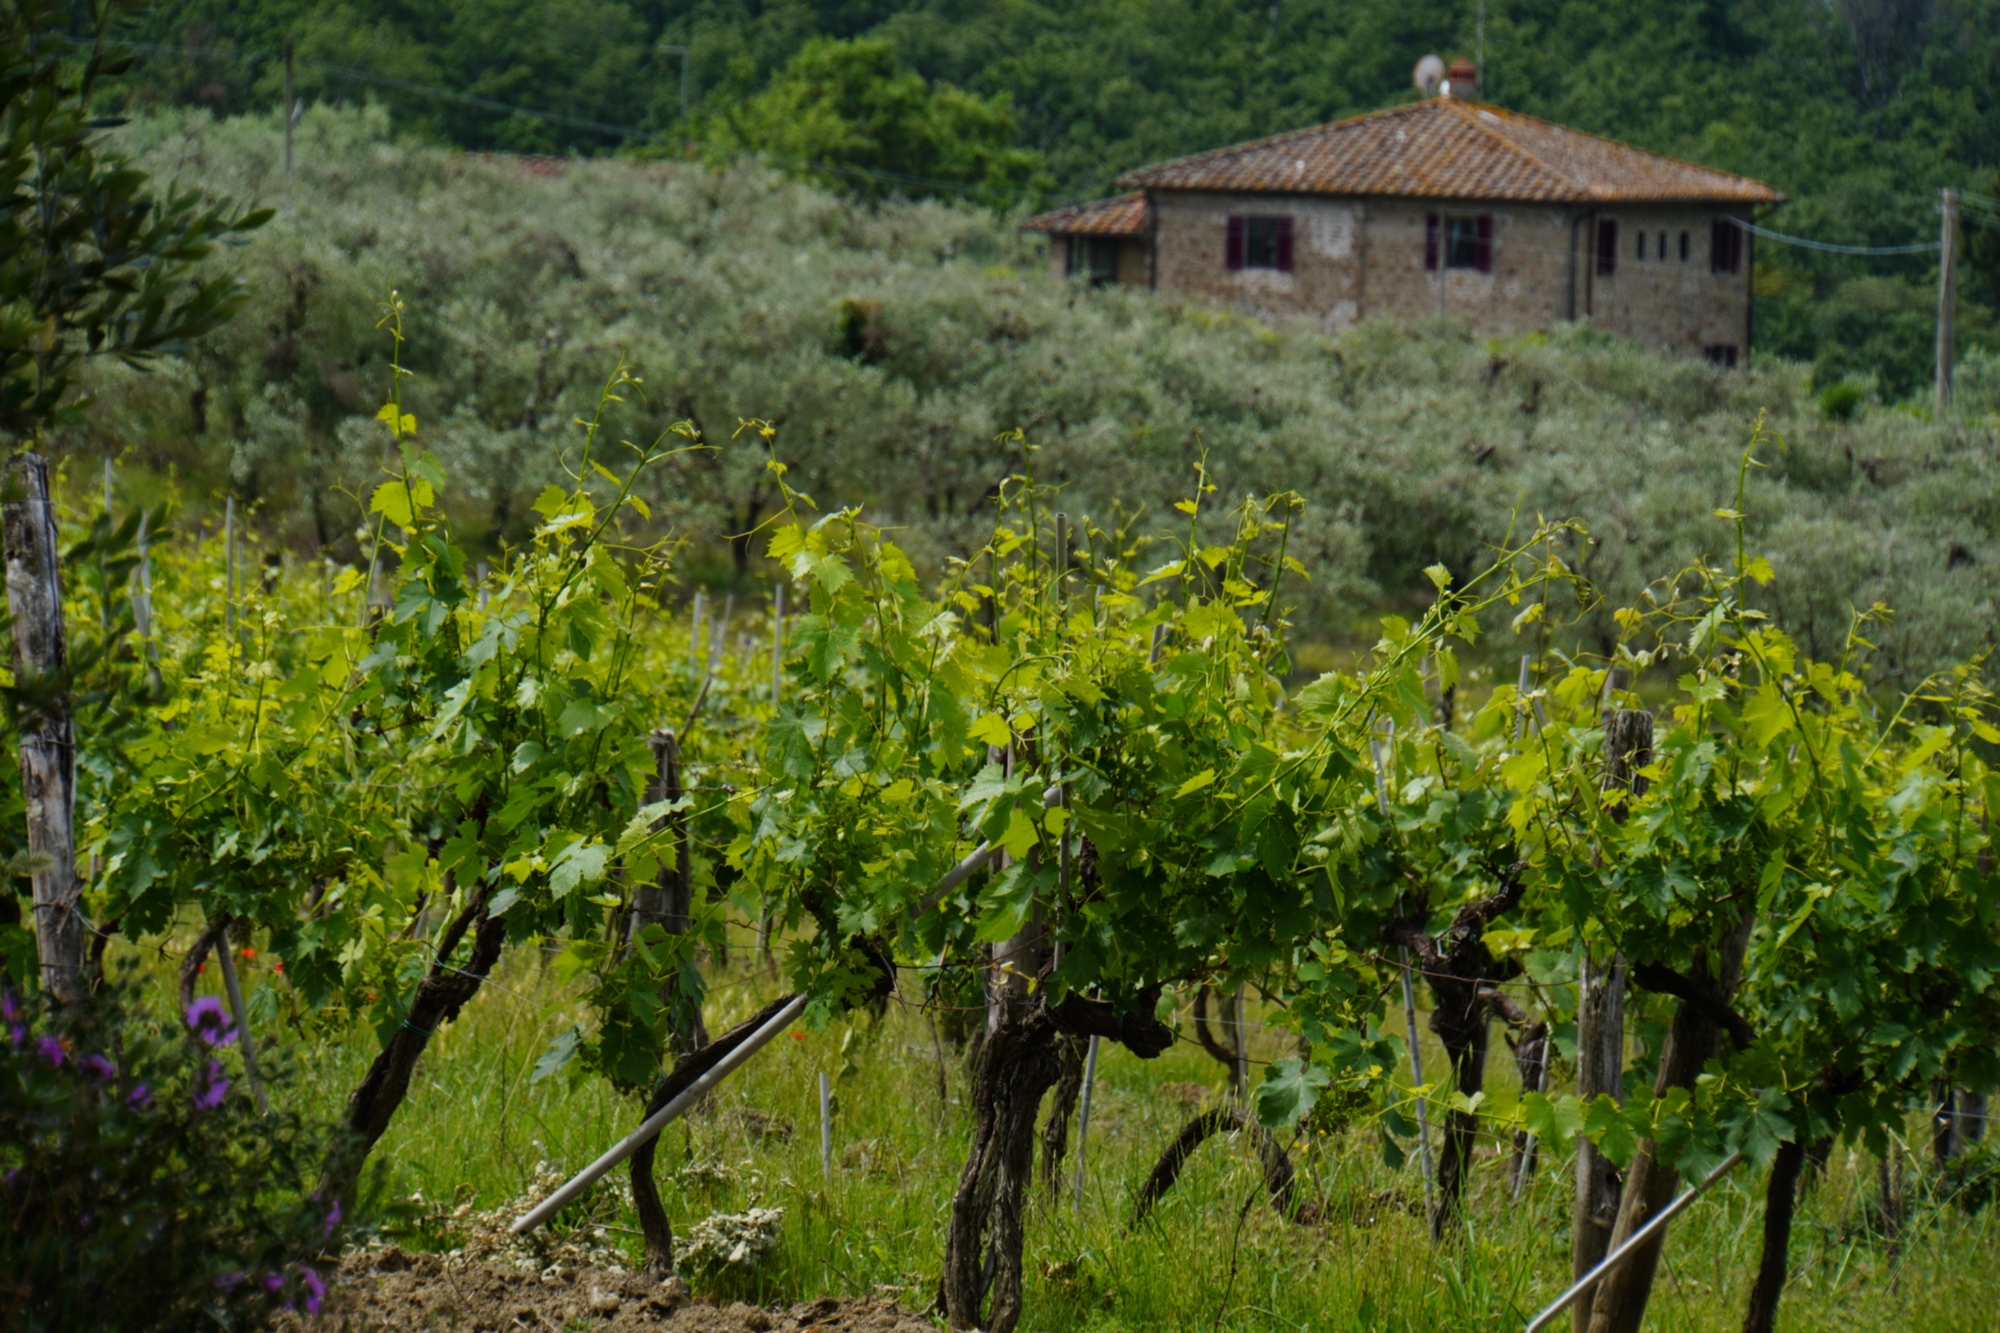 The vineyards around Florence